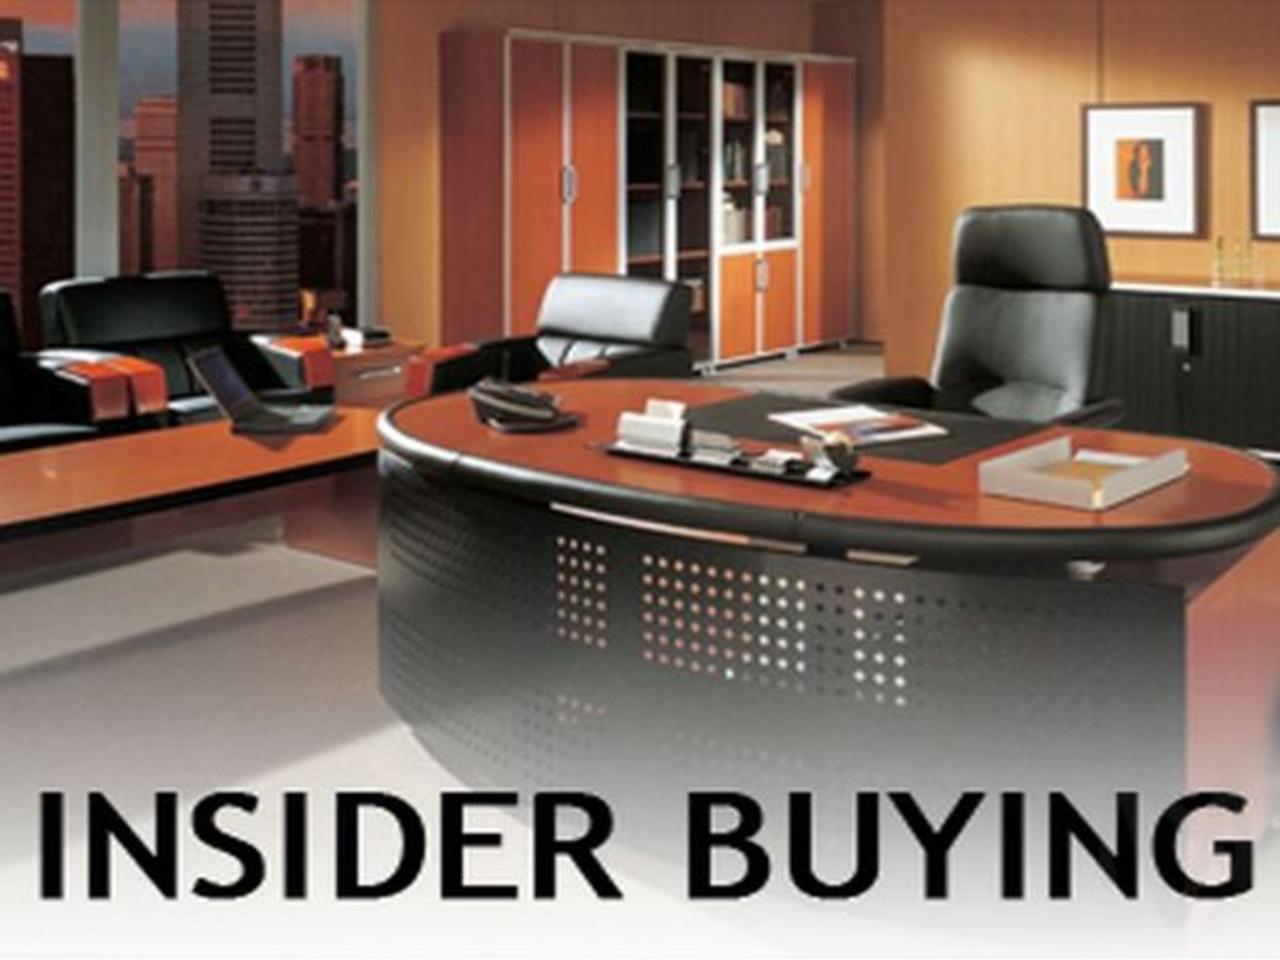 Monday 11/29 Insider Buying Report: CION, EW